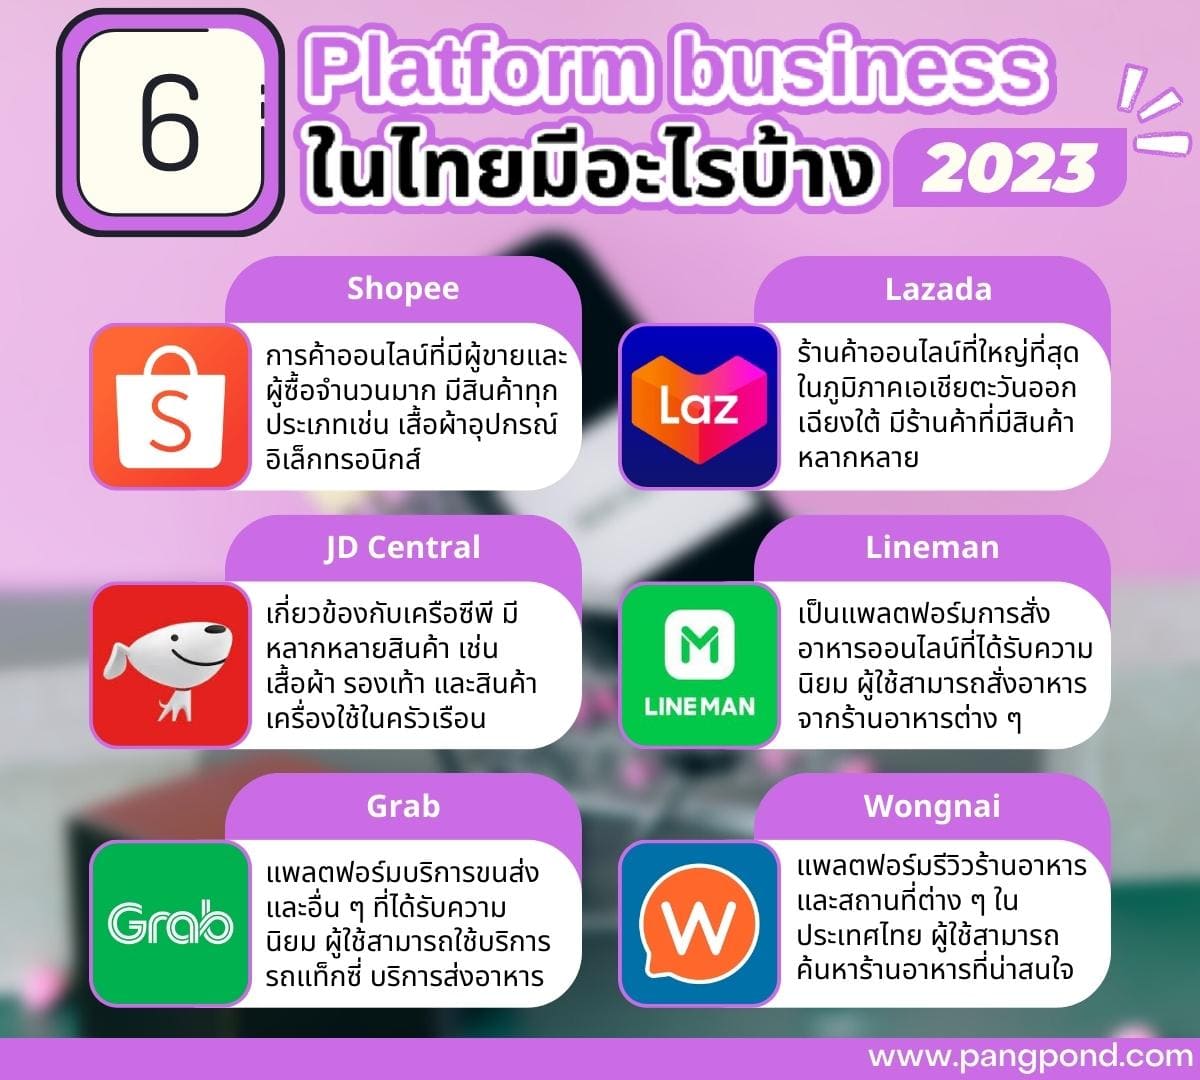 6 Platform business ในไทย